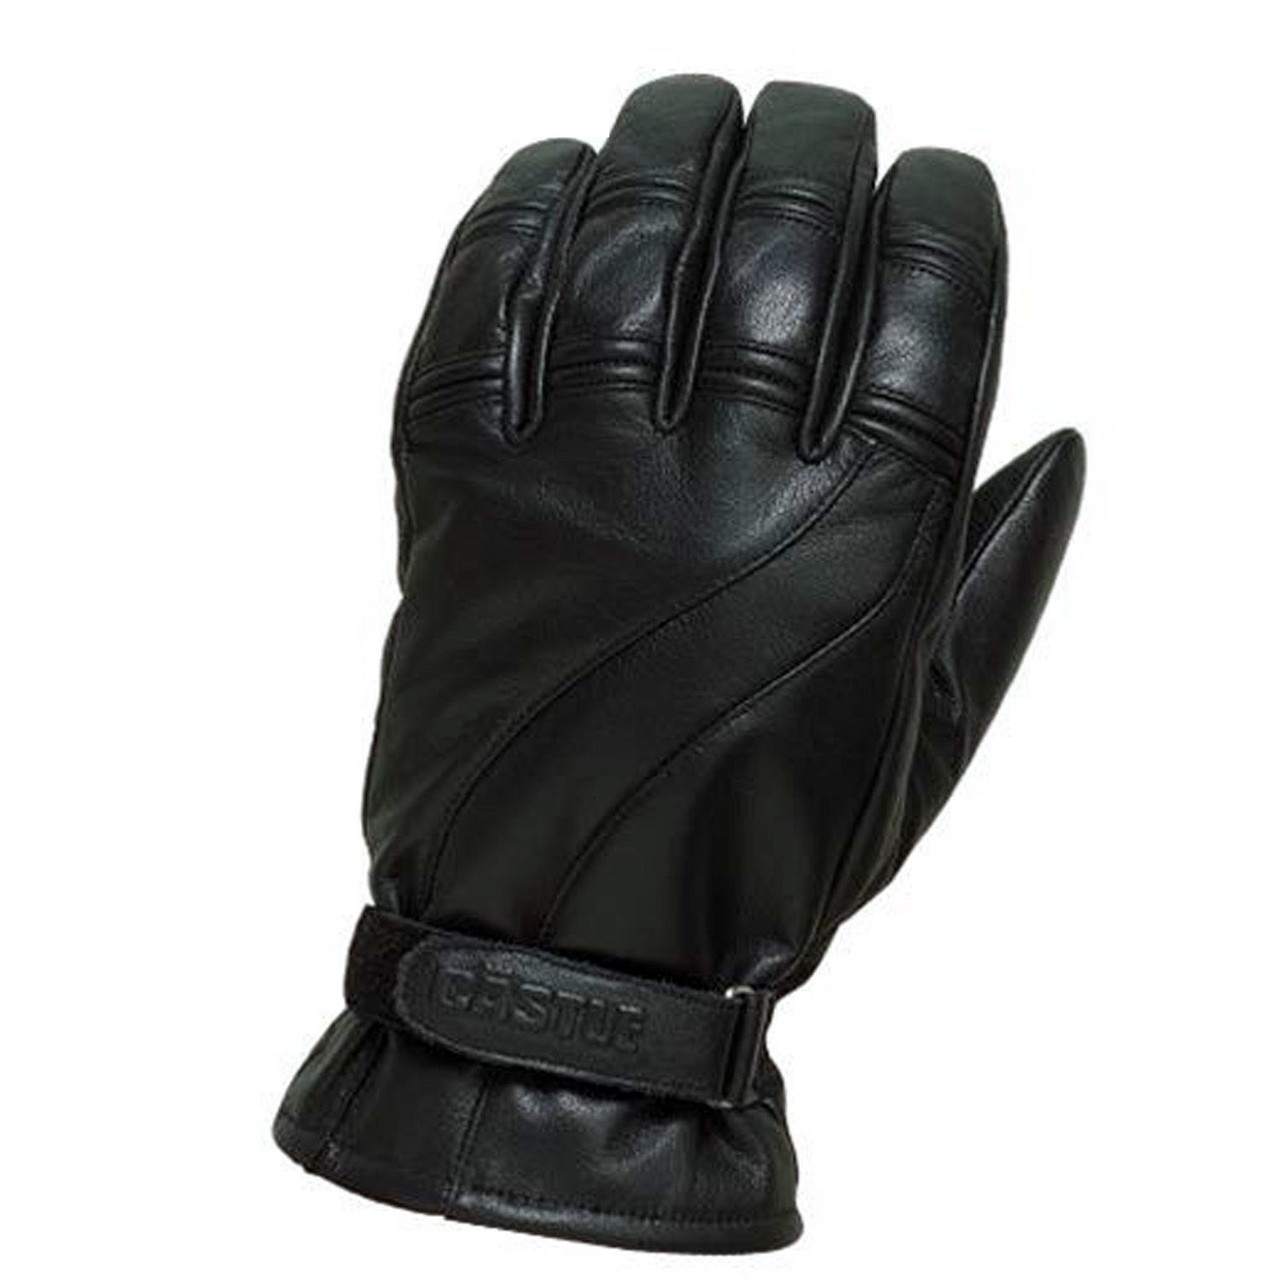 Castle New Men's Black Leather Mid Season Riding Gloves, 2X-Large, 20-3019